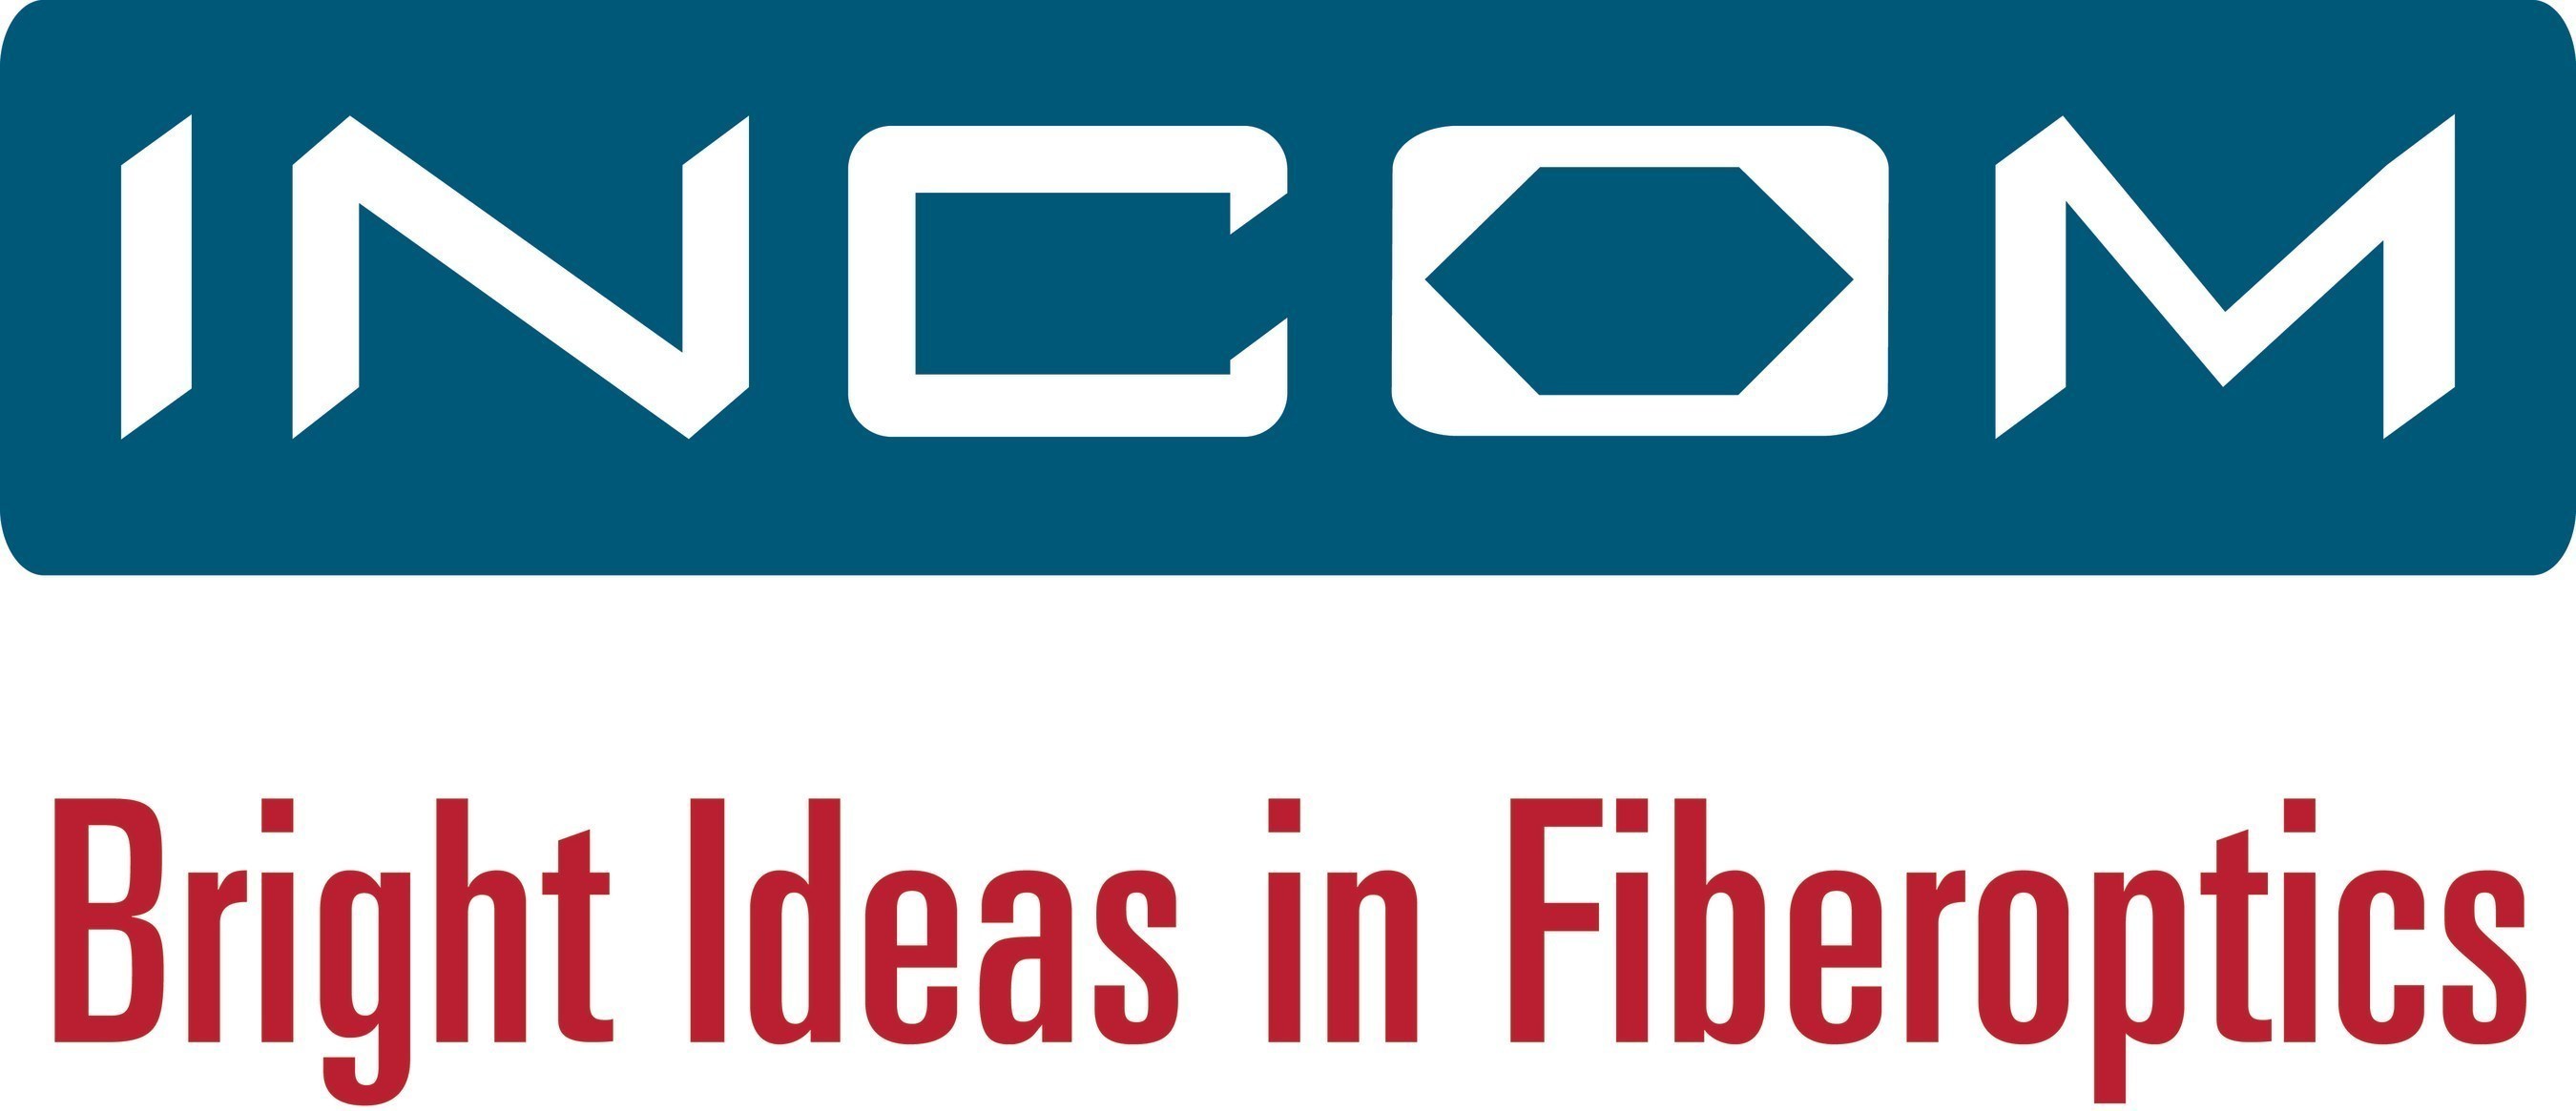 Incom is the world leader in fused fiber optics (PRNewsFoto/Incom)